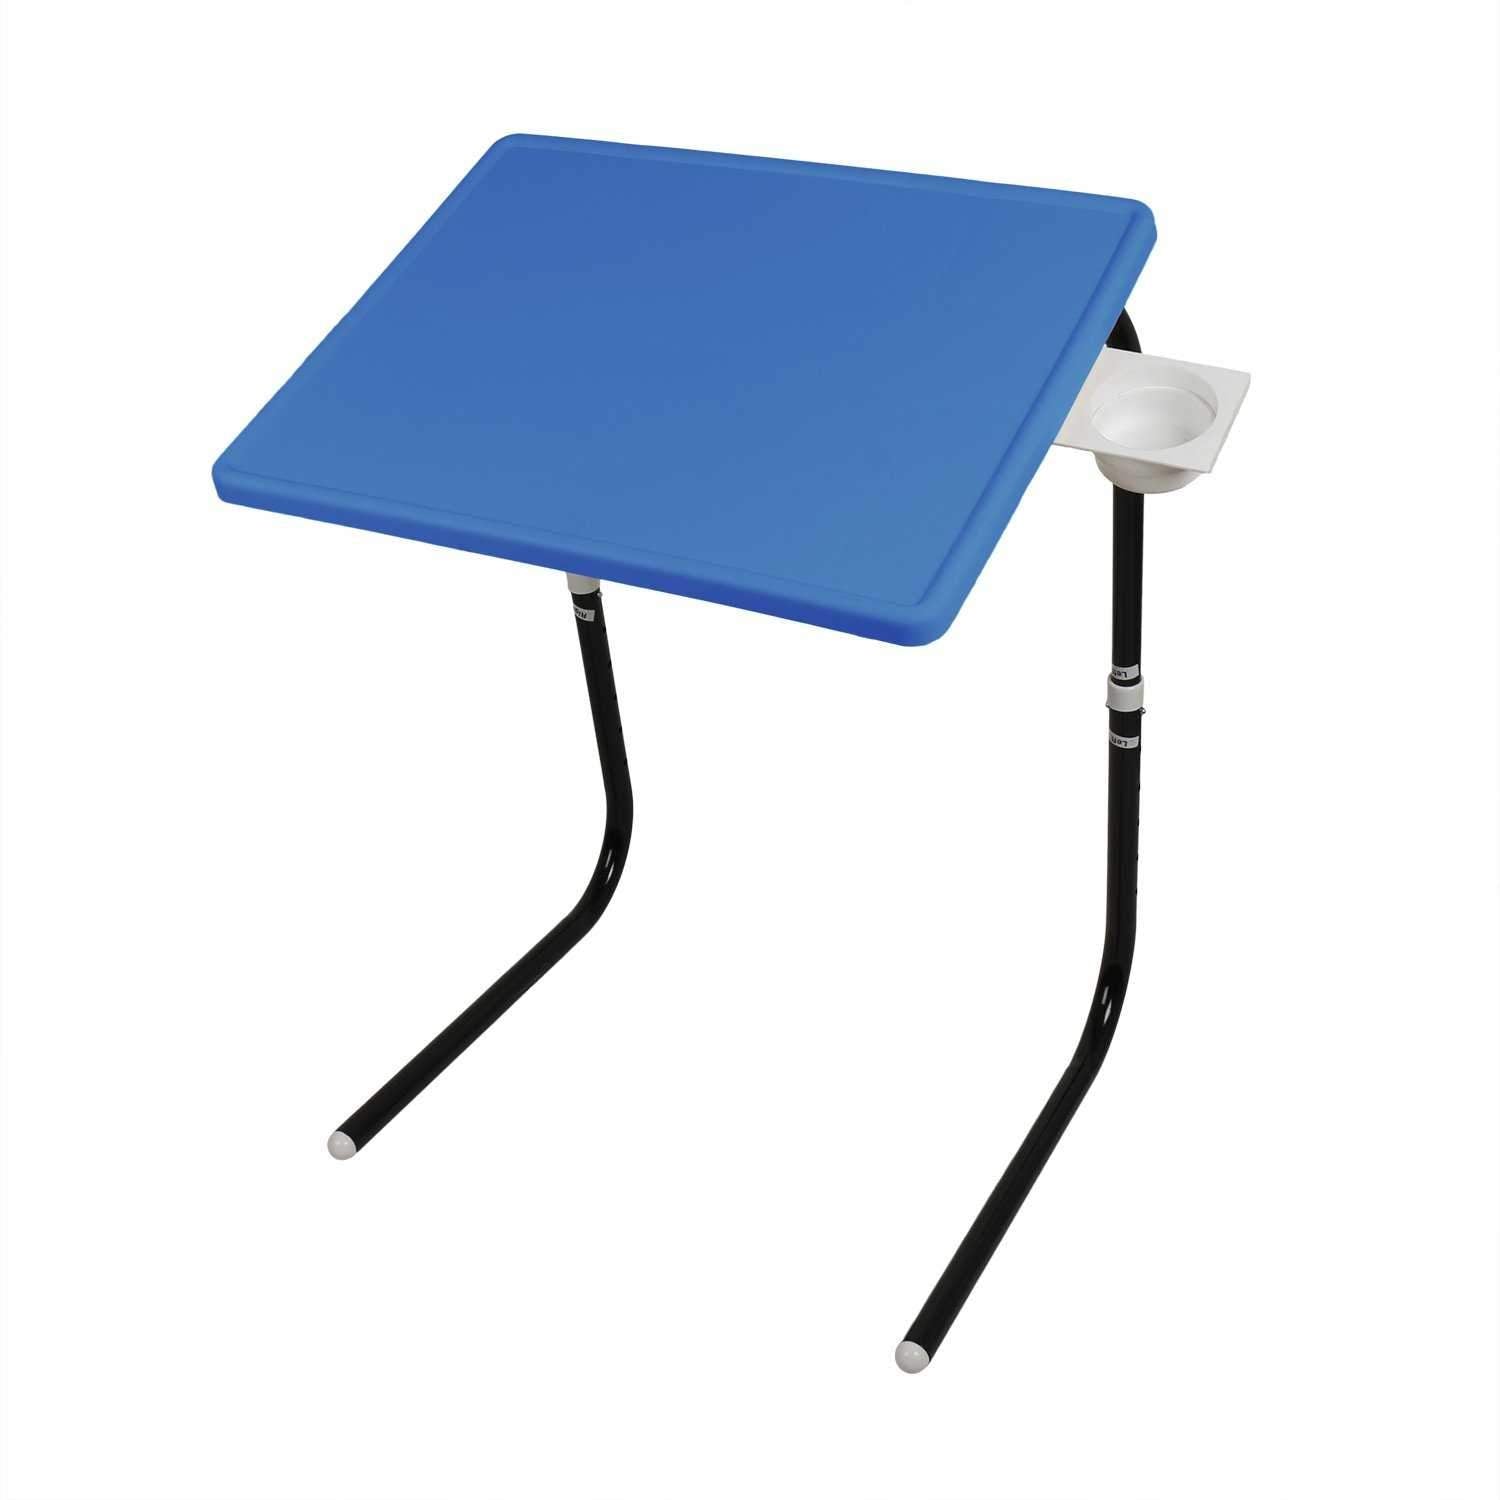 Tablemate combo set - Blue & Black